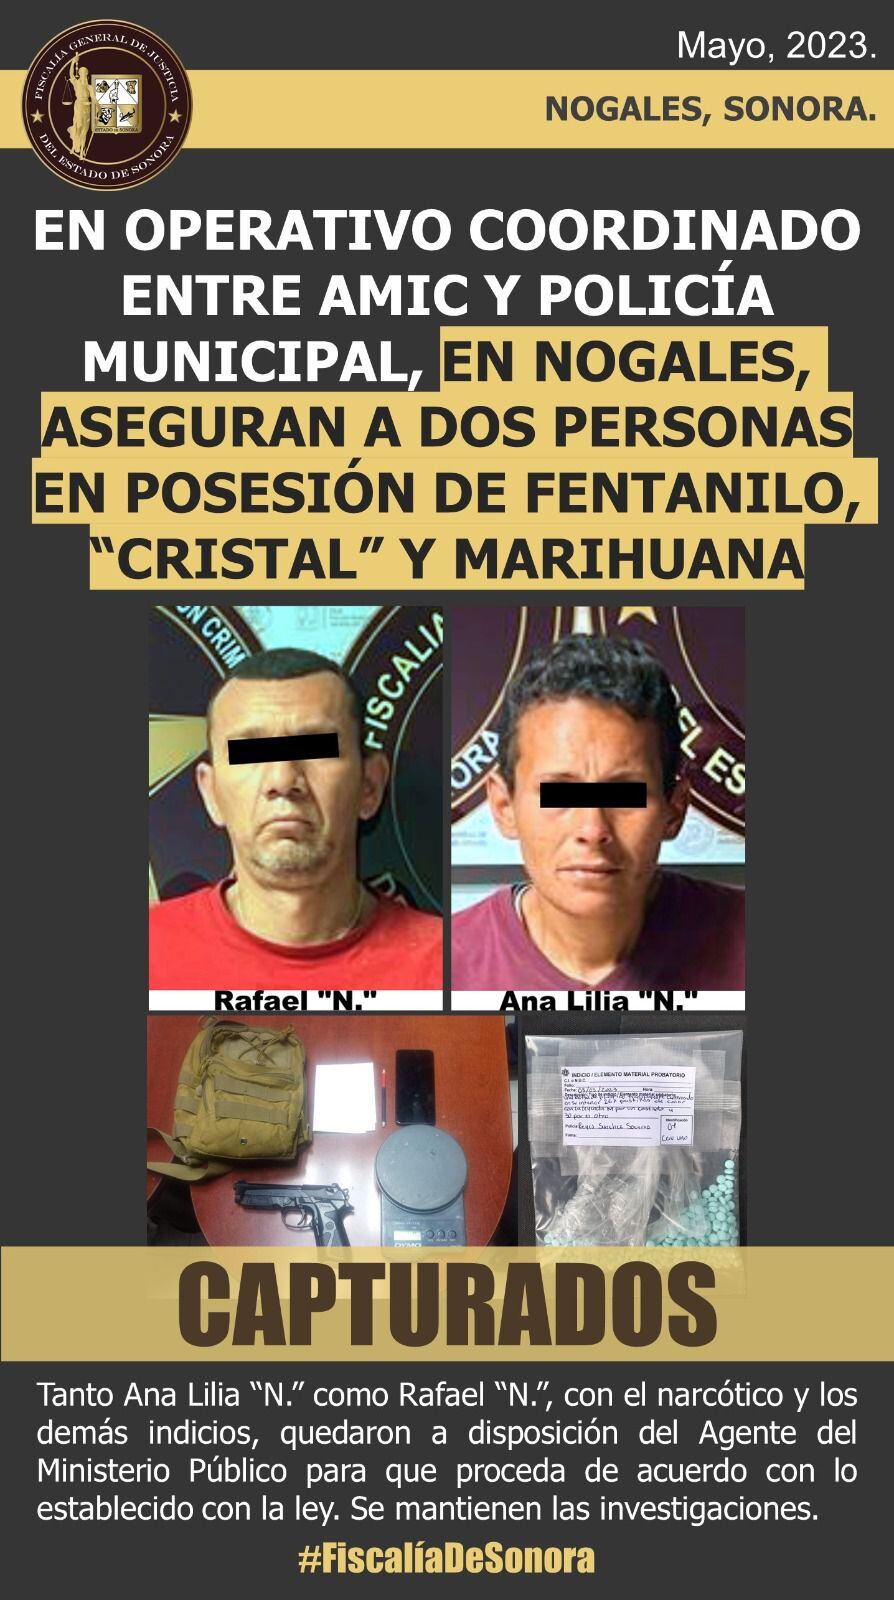 Two arrested Sonora fentanyl, crystal, marijuana